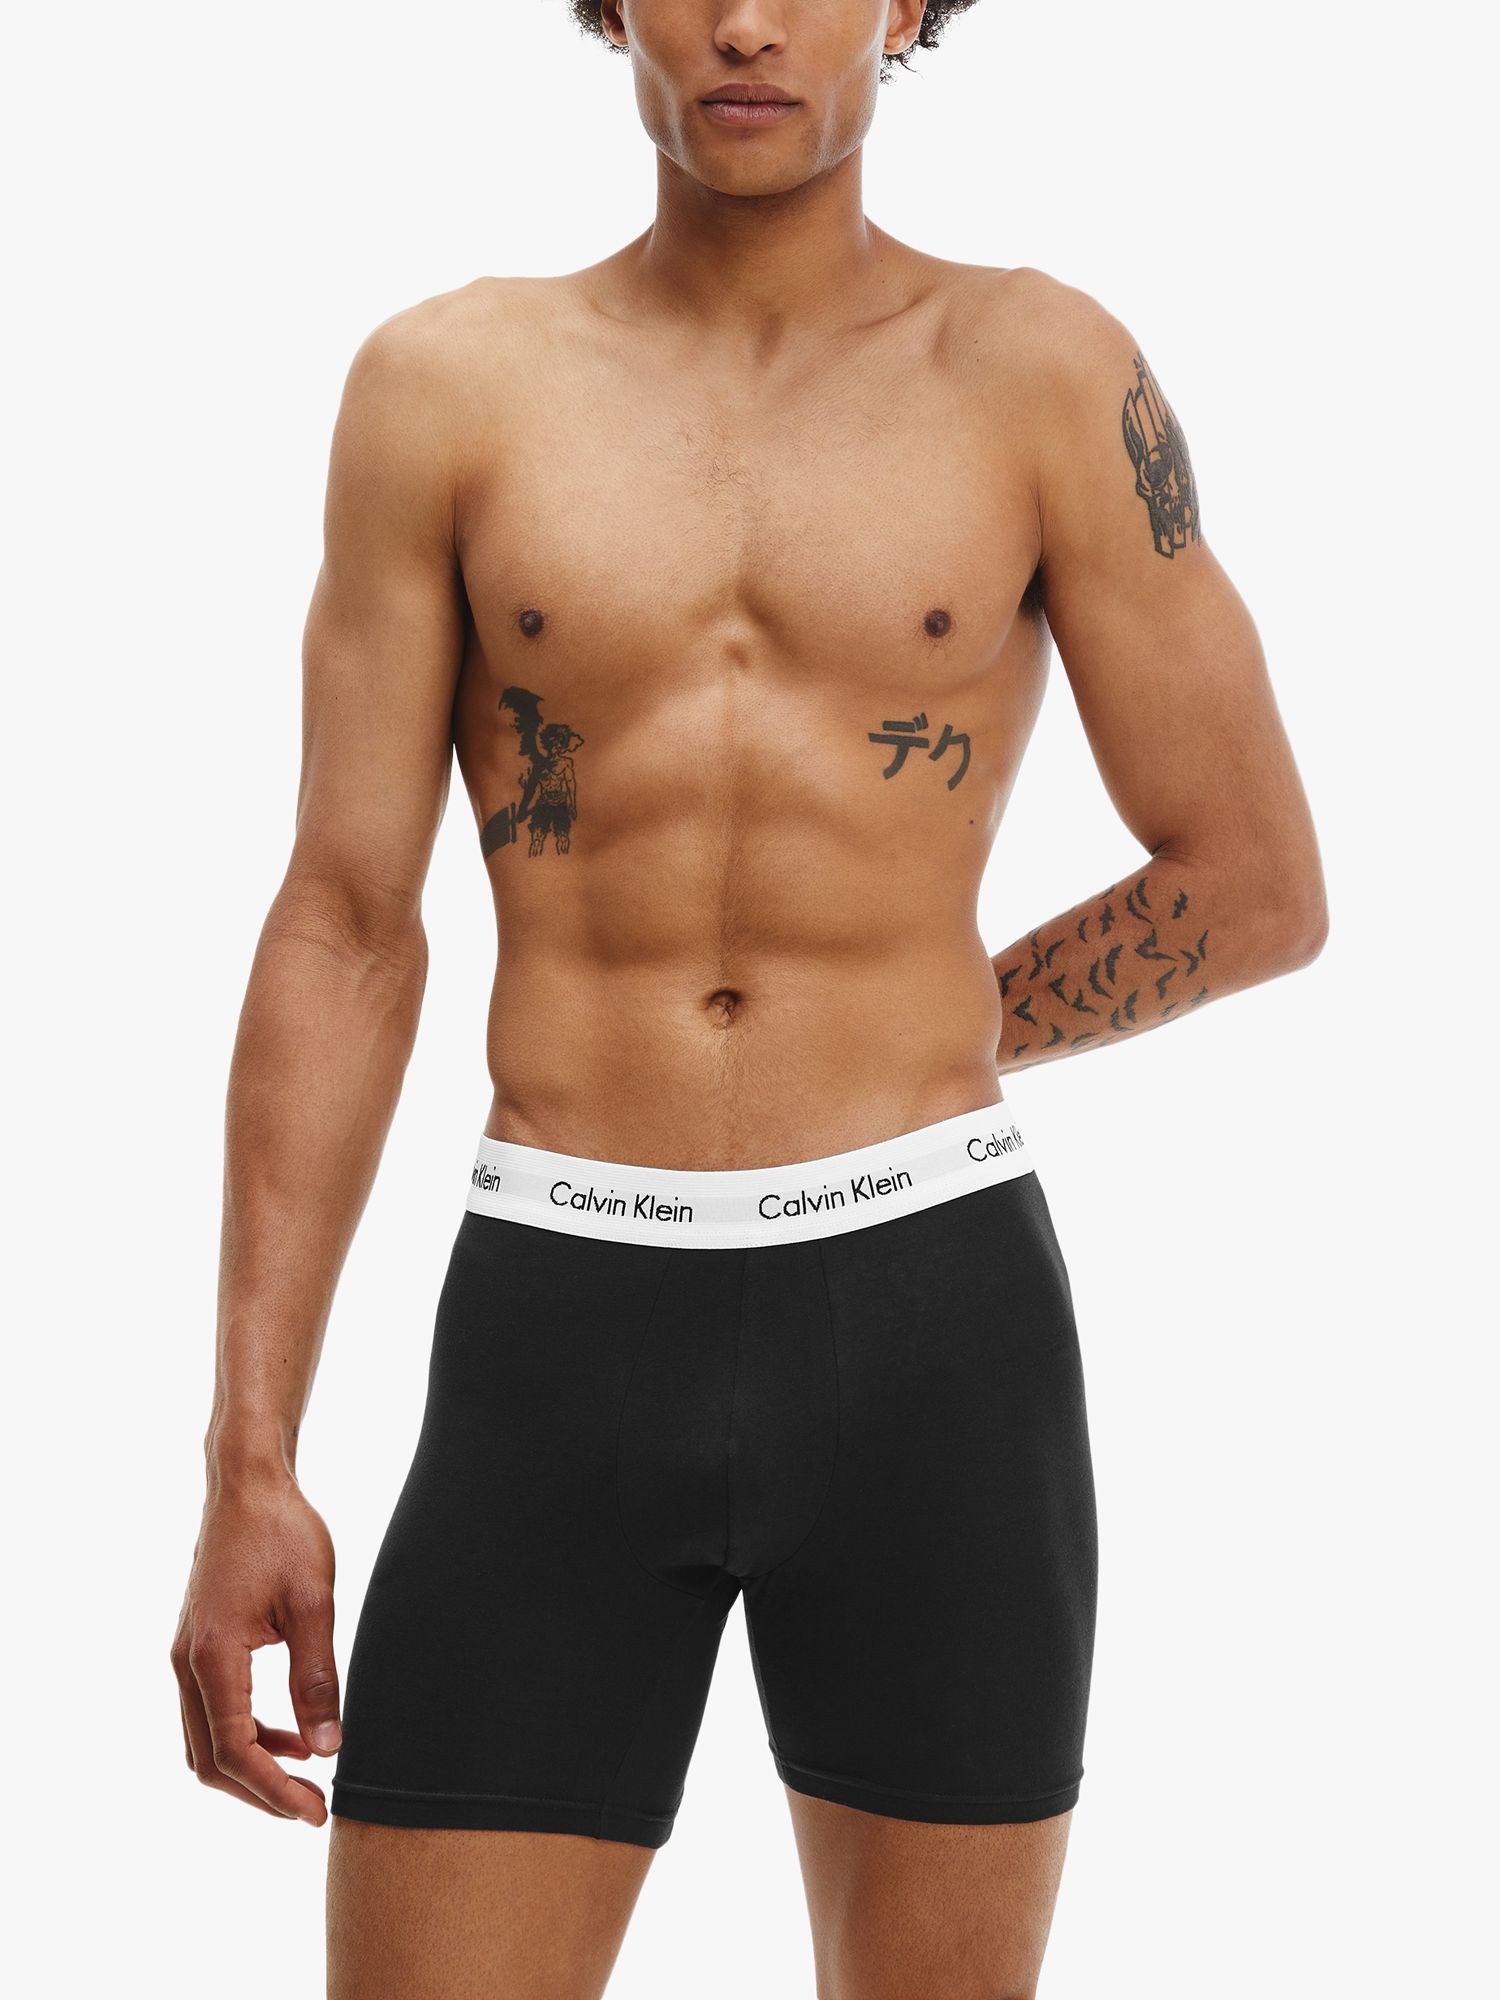 Lucky Brand Men's Underwear - Classic Boxer Briefs (3 Pack)